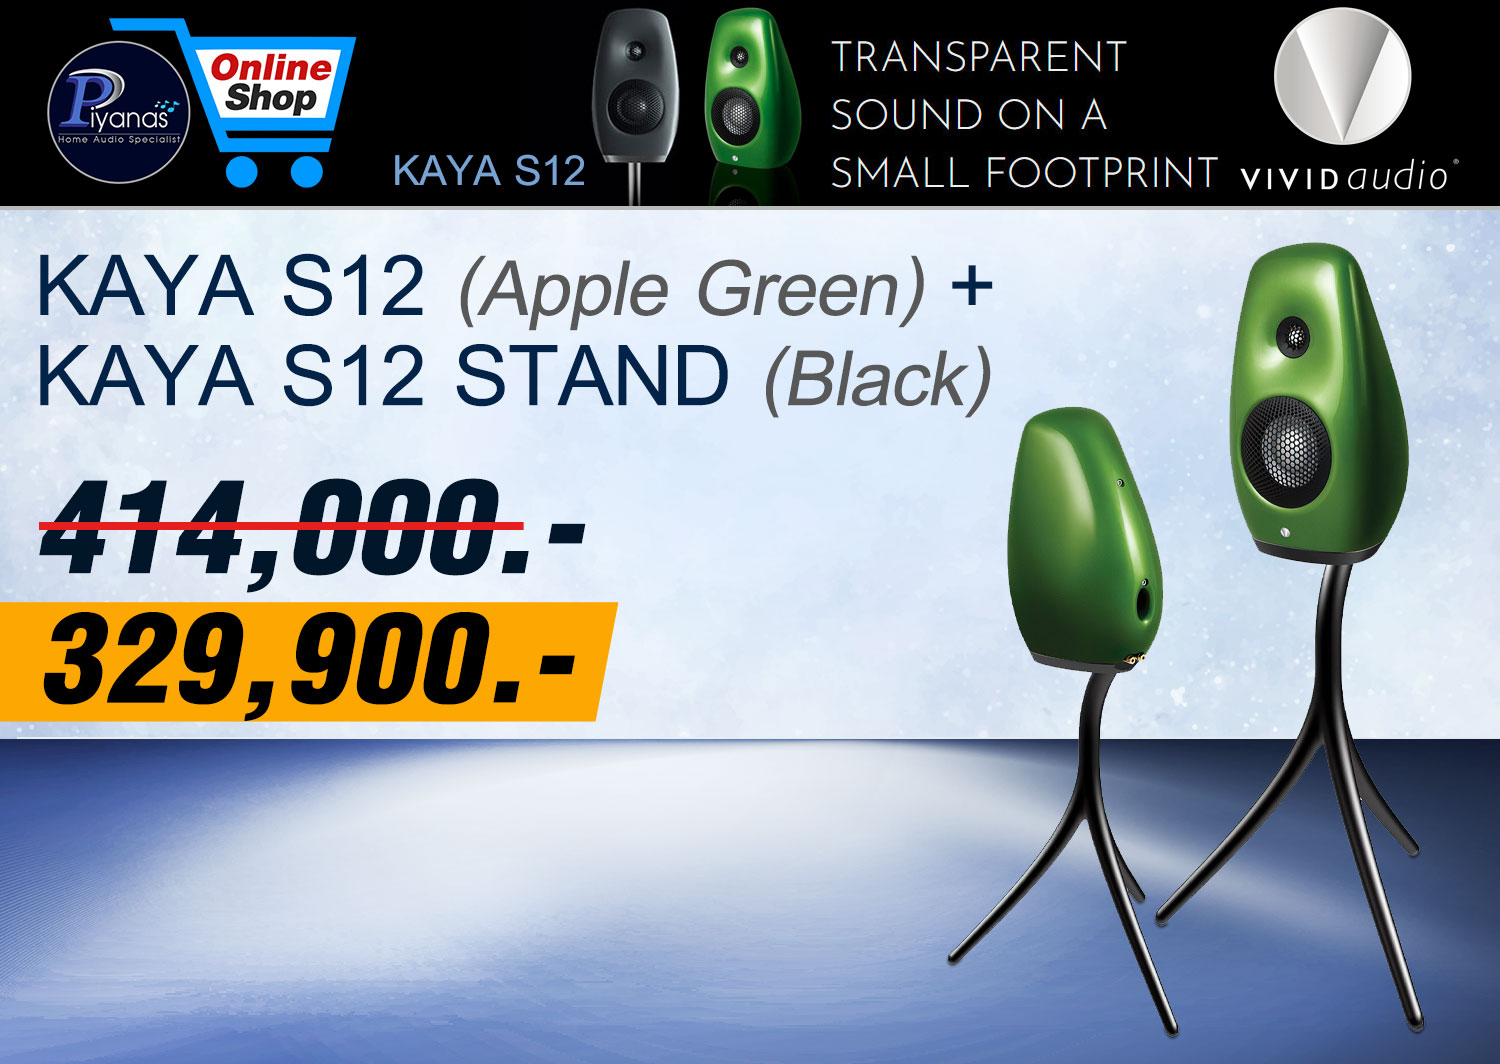 KAYA S12 (Apple Green) +
KAYA S12 STAND (Black)